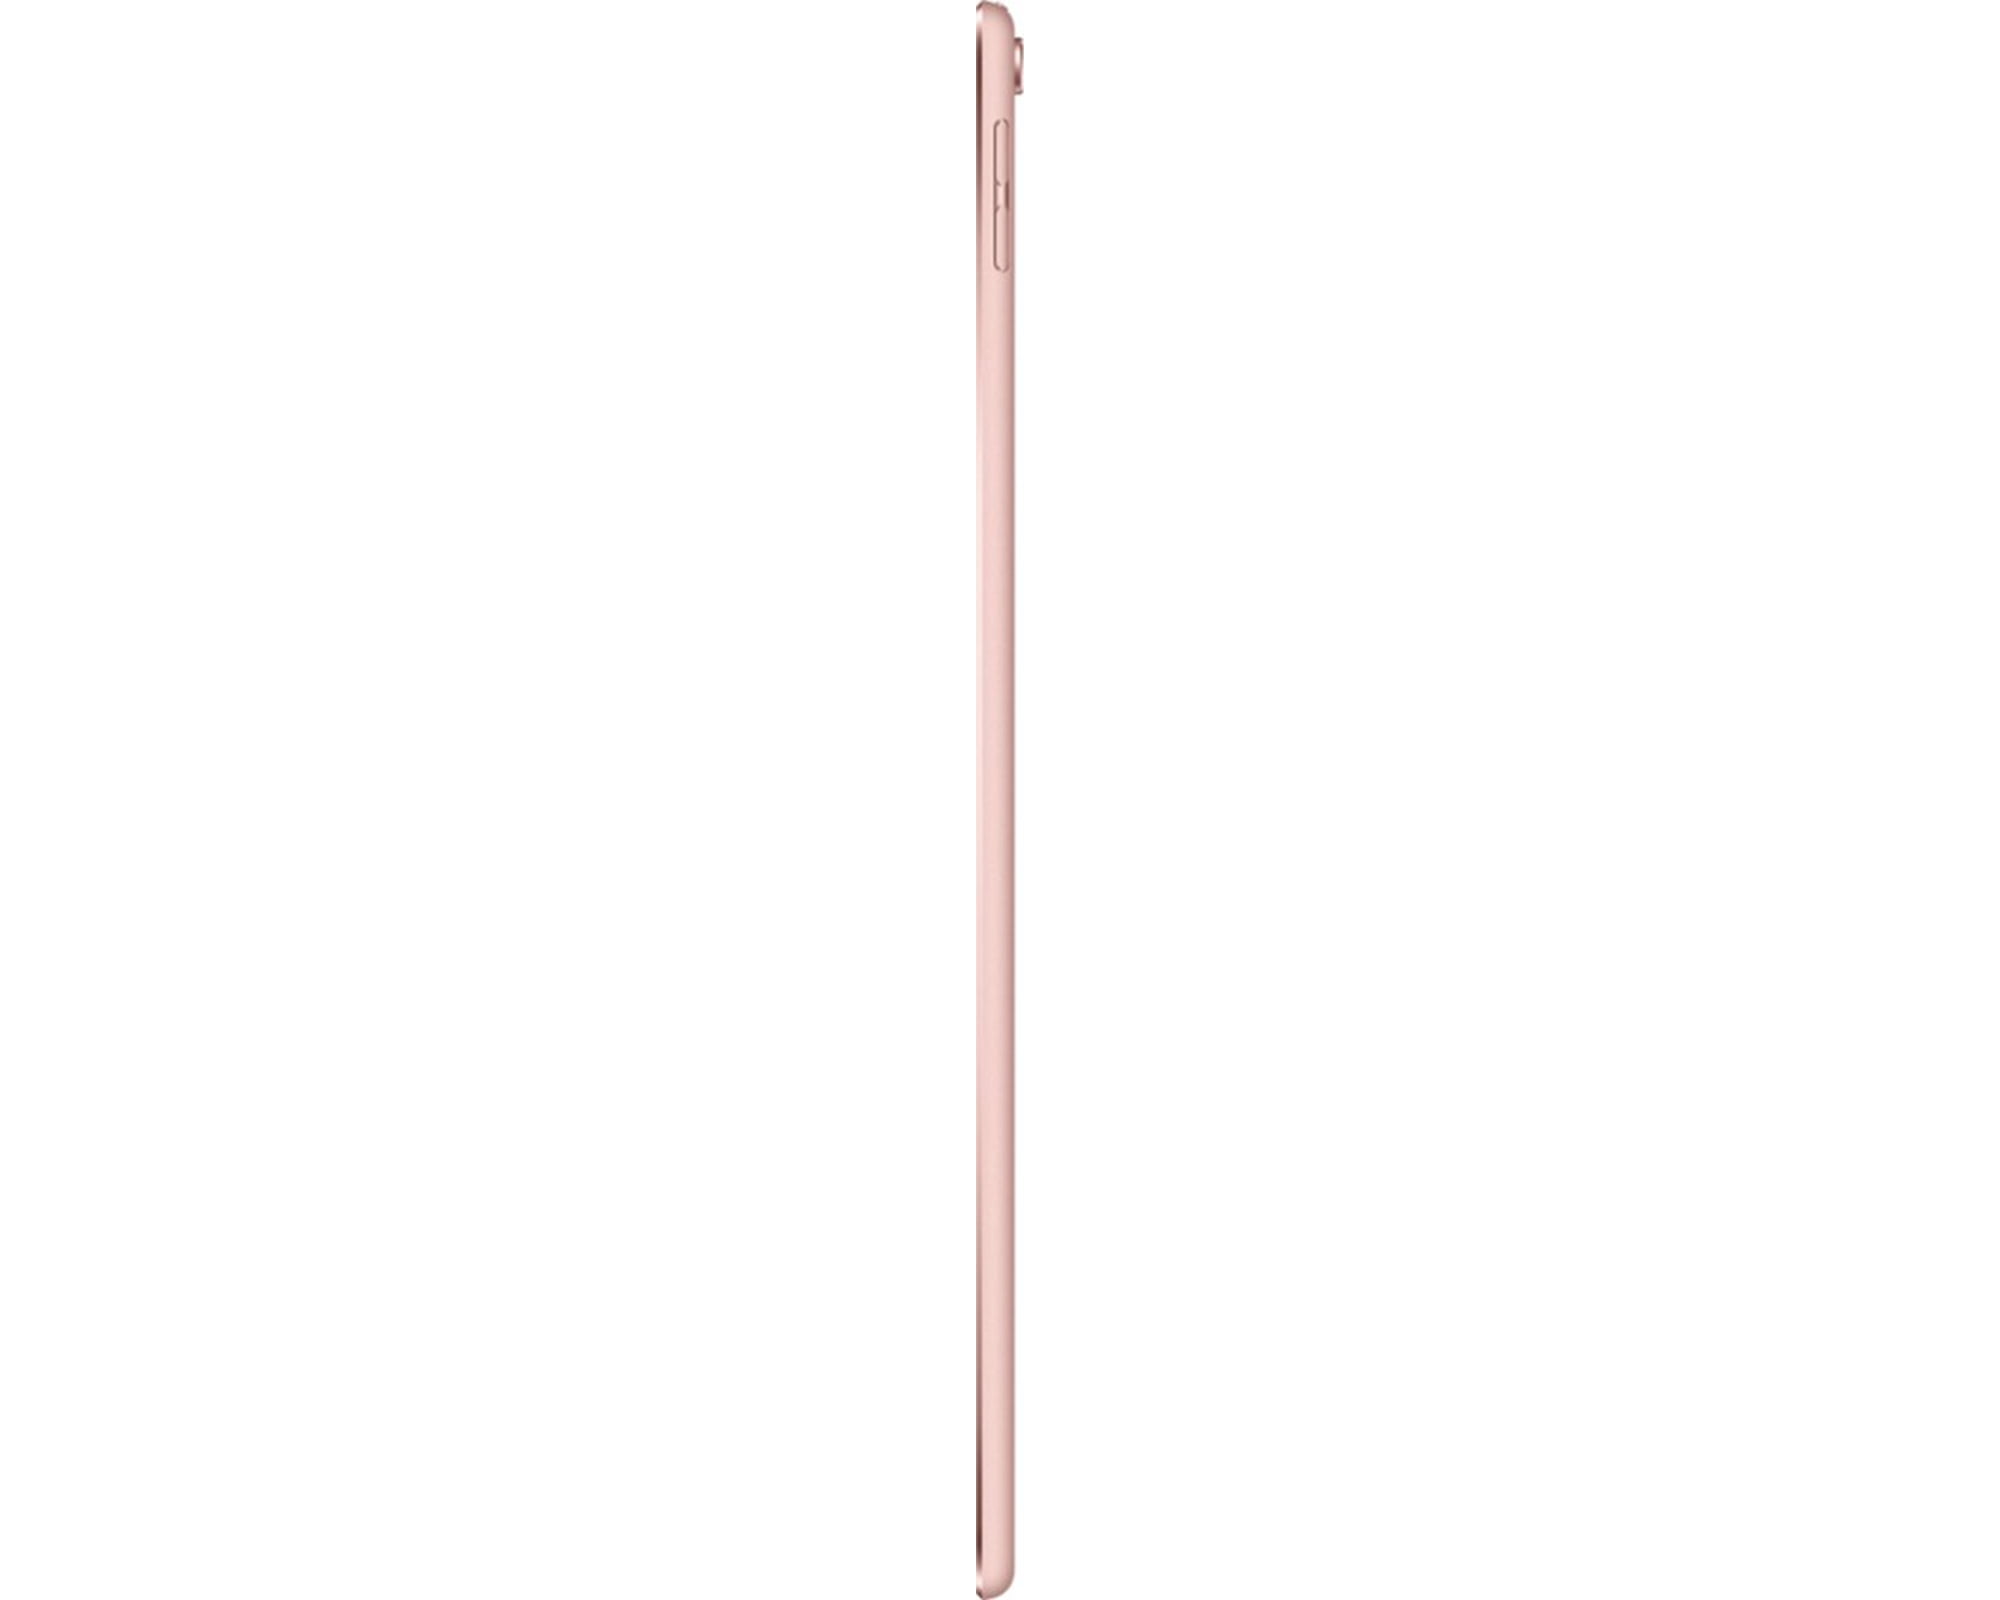 Restored Apple iPad Pro 10.5 64GB Rose Gold (WiFi) (Refurbished